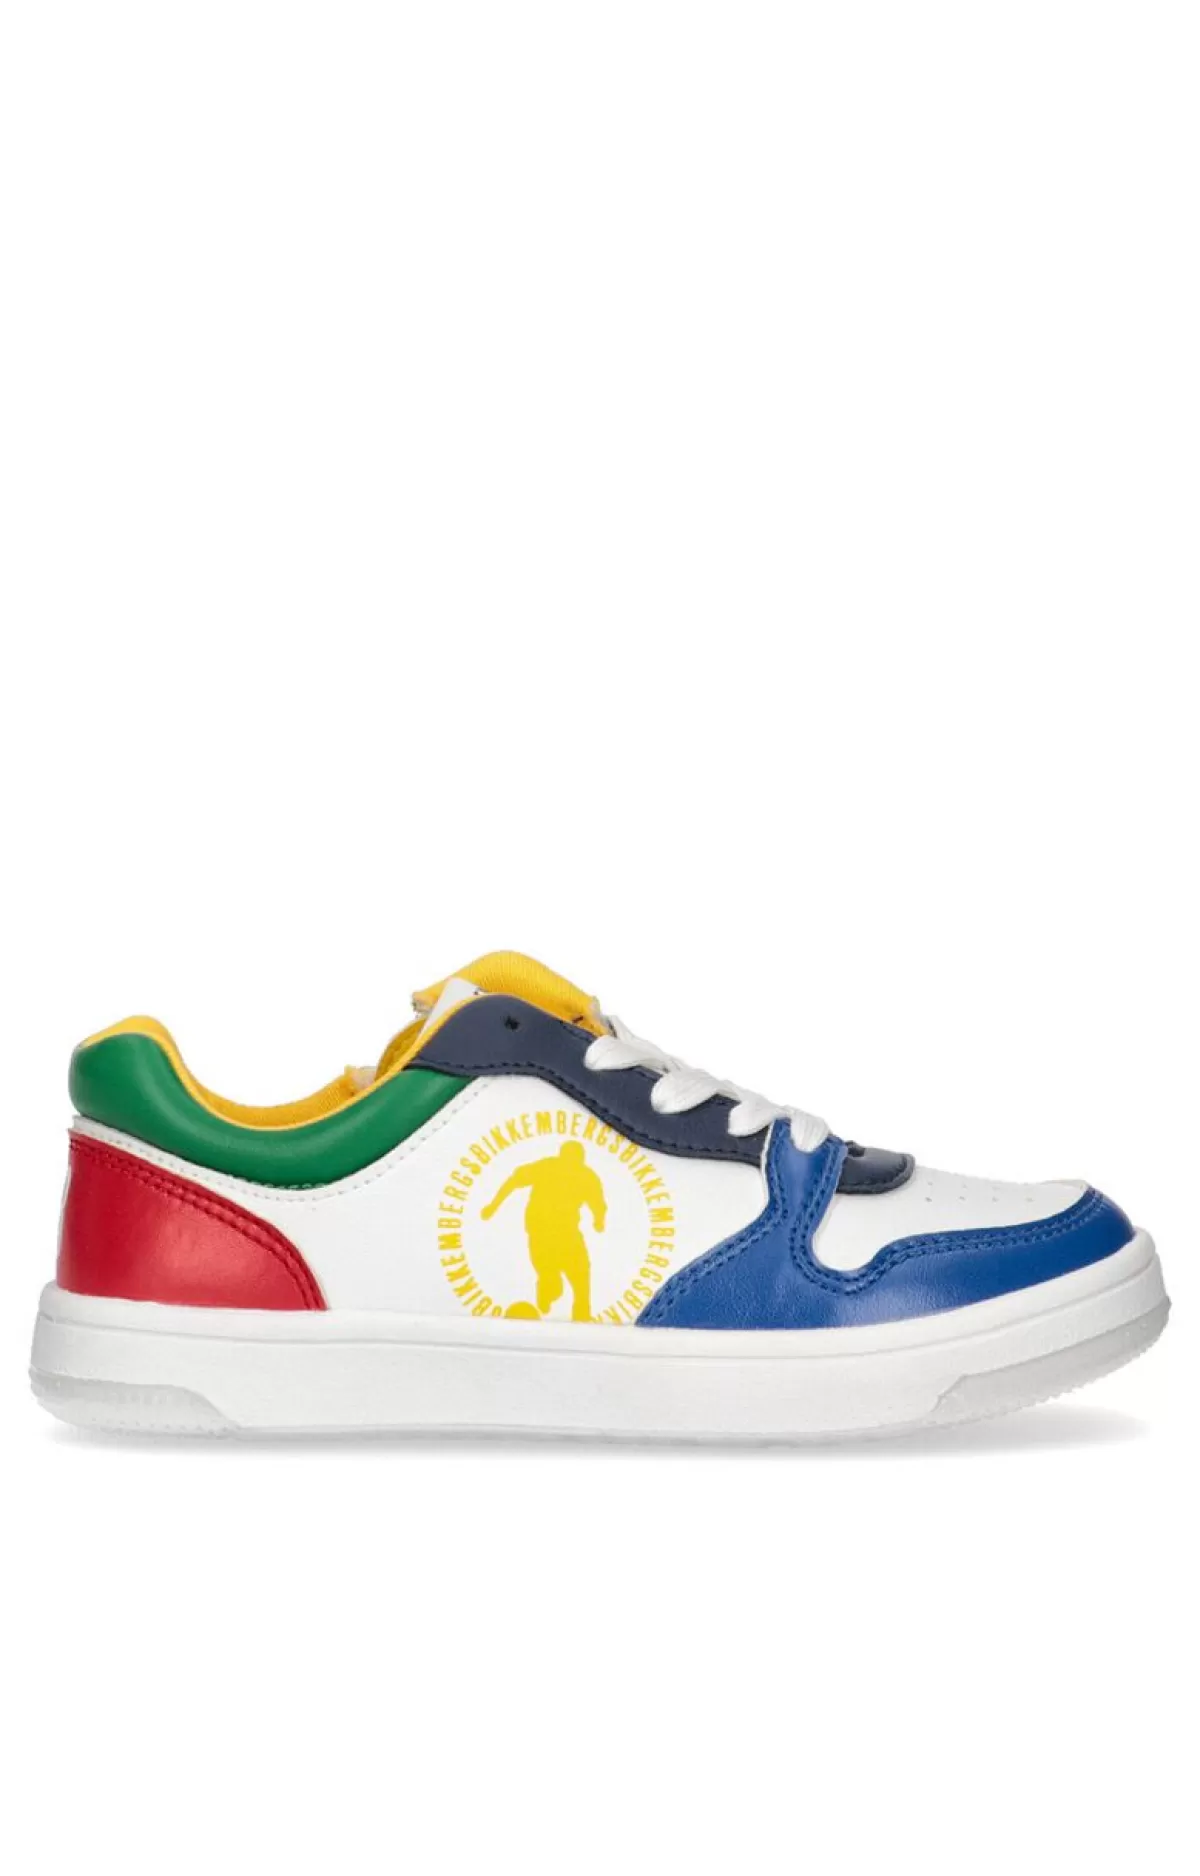 Bikkembergs Boys' Sneakers - Lenox White/Multicolor Flash Sale